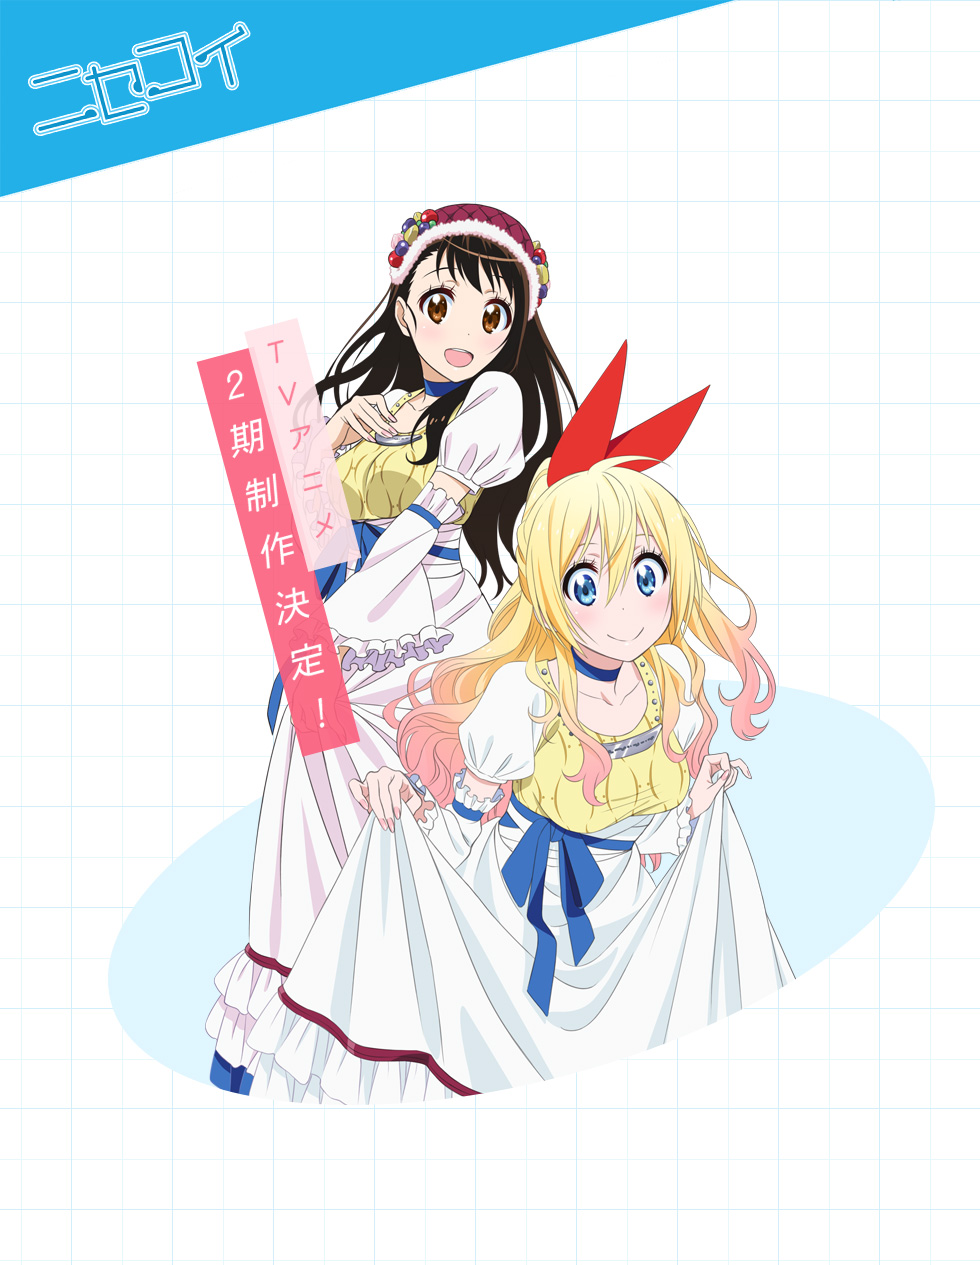 First Nisekoi Anime Season 2 Visual Released - Otaku Tale